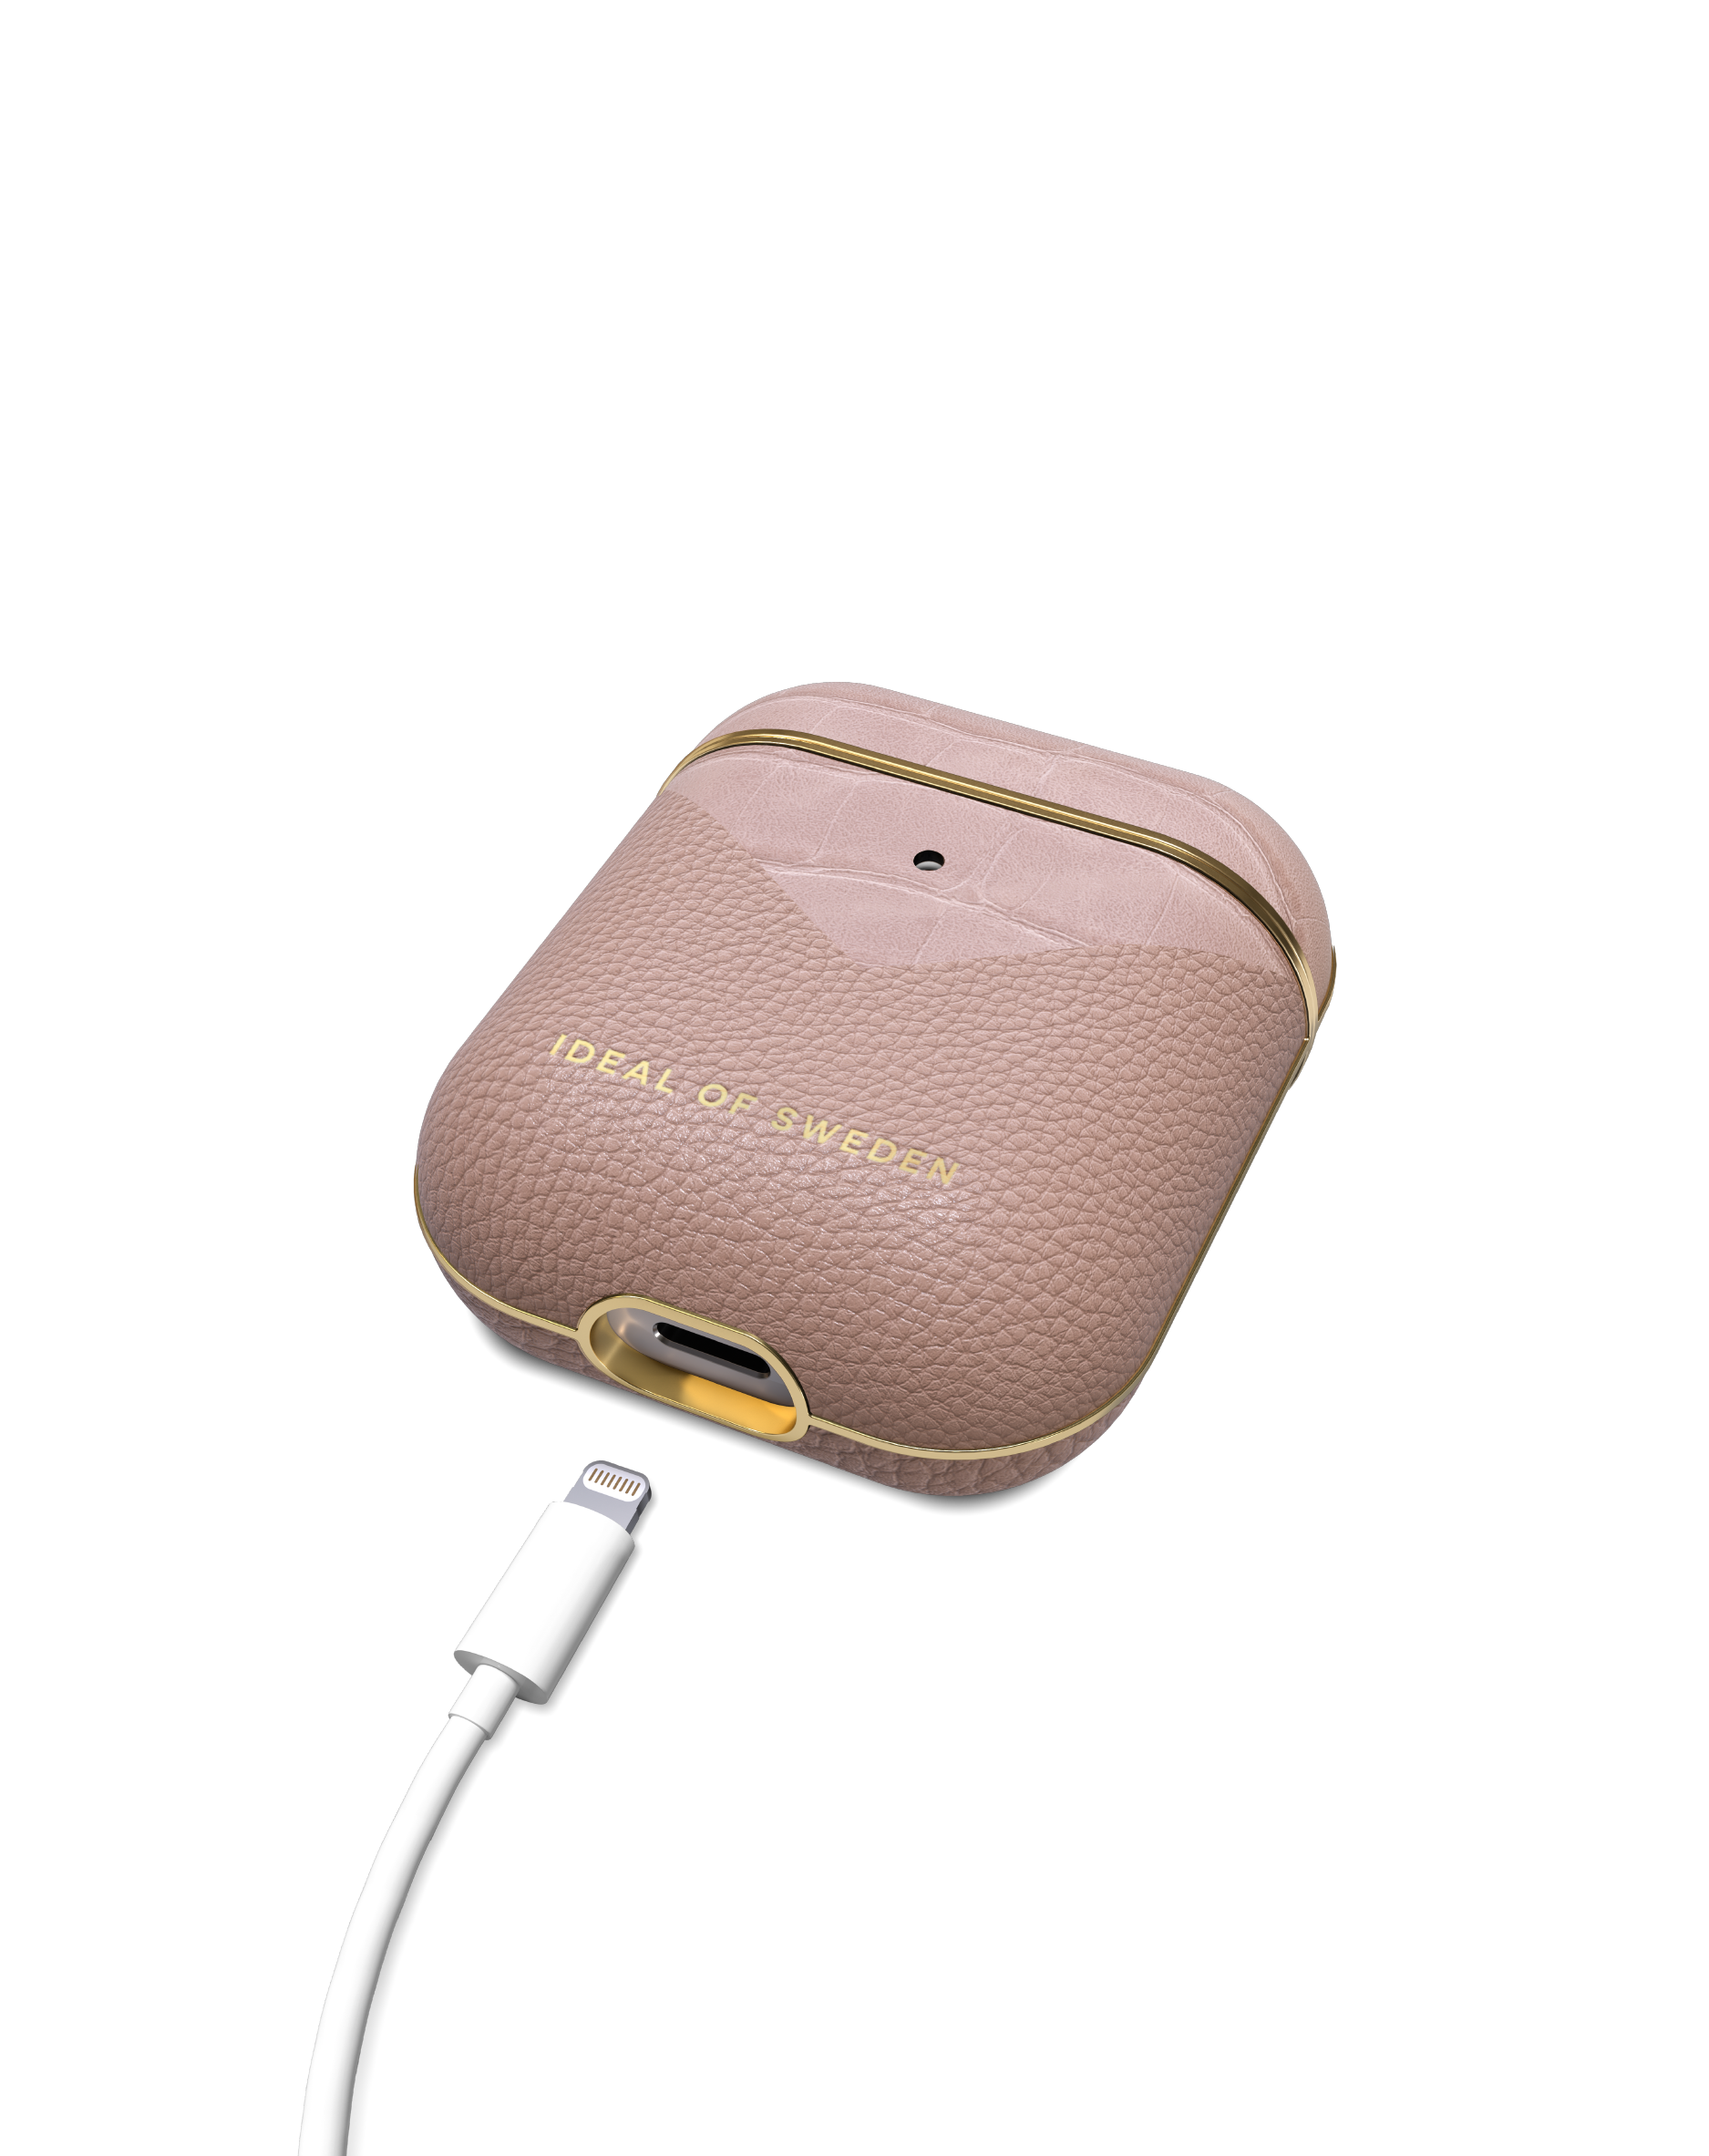 IDEAL OF SWEDEN IDFAPC-202 AirPod Smoke Cover Full Rose passend Apple Croco für: Case